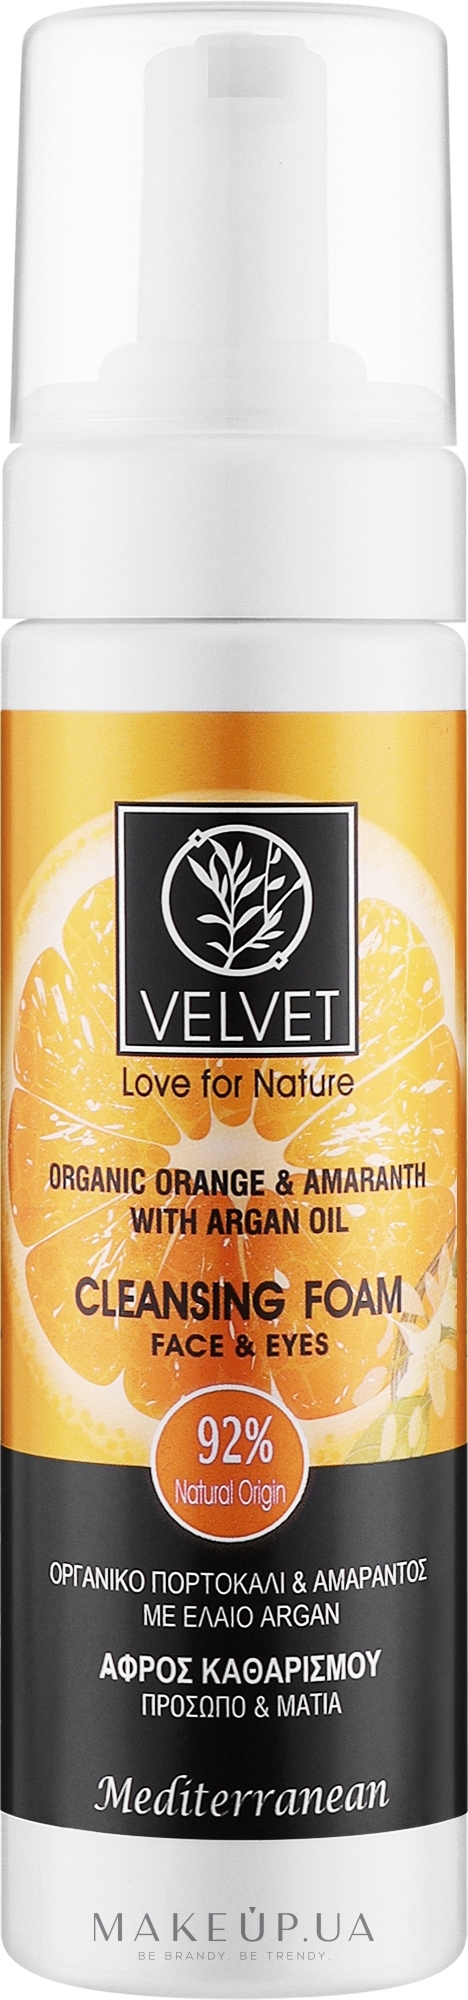 Очищаюча пінка для обличчя та очей - Velvet Love for Nature Organic Orange & Amaranth Cleansing Foam Face & Eyes — фото 200ml